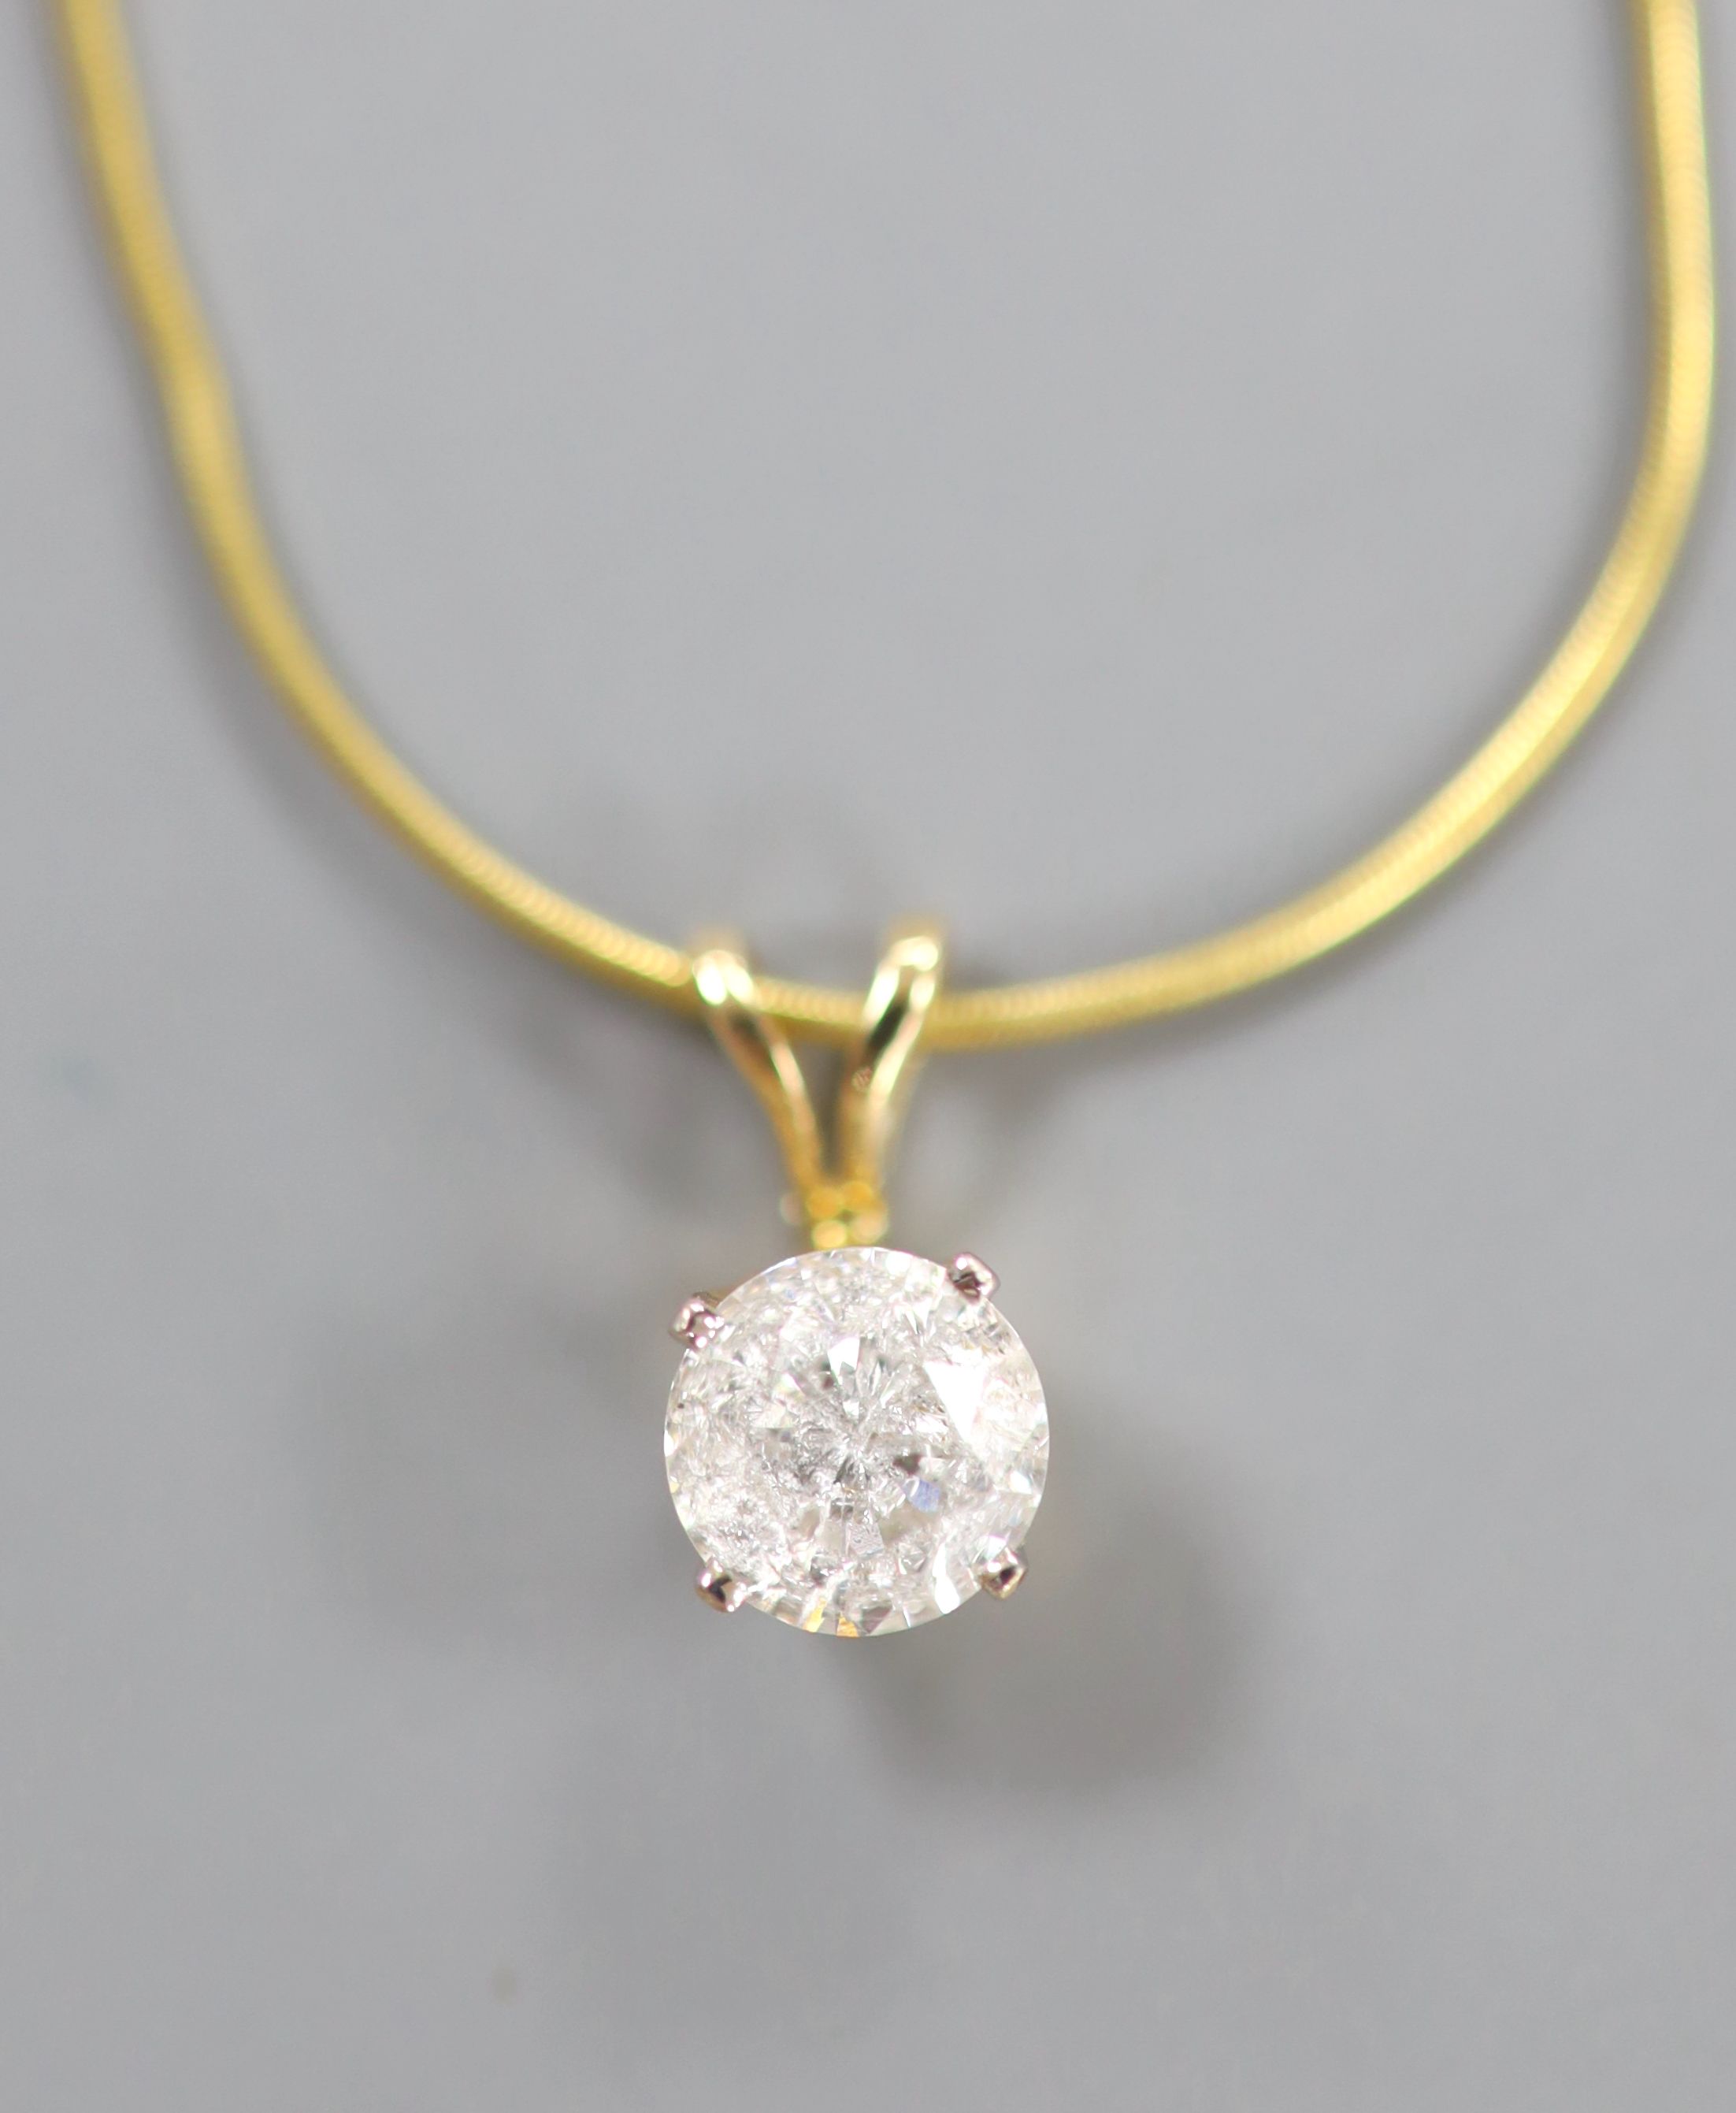 A solitaire diamond pendant on 9ct gold fine chain